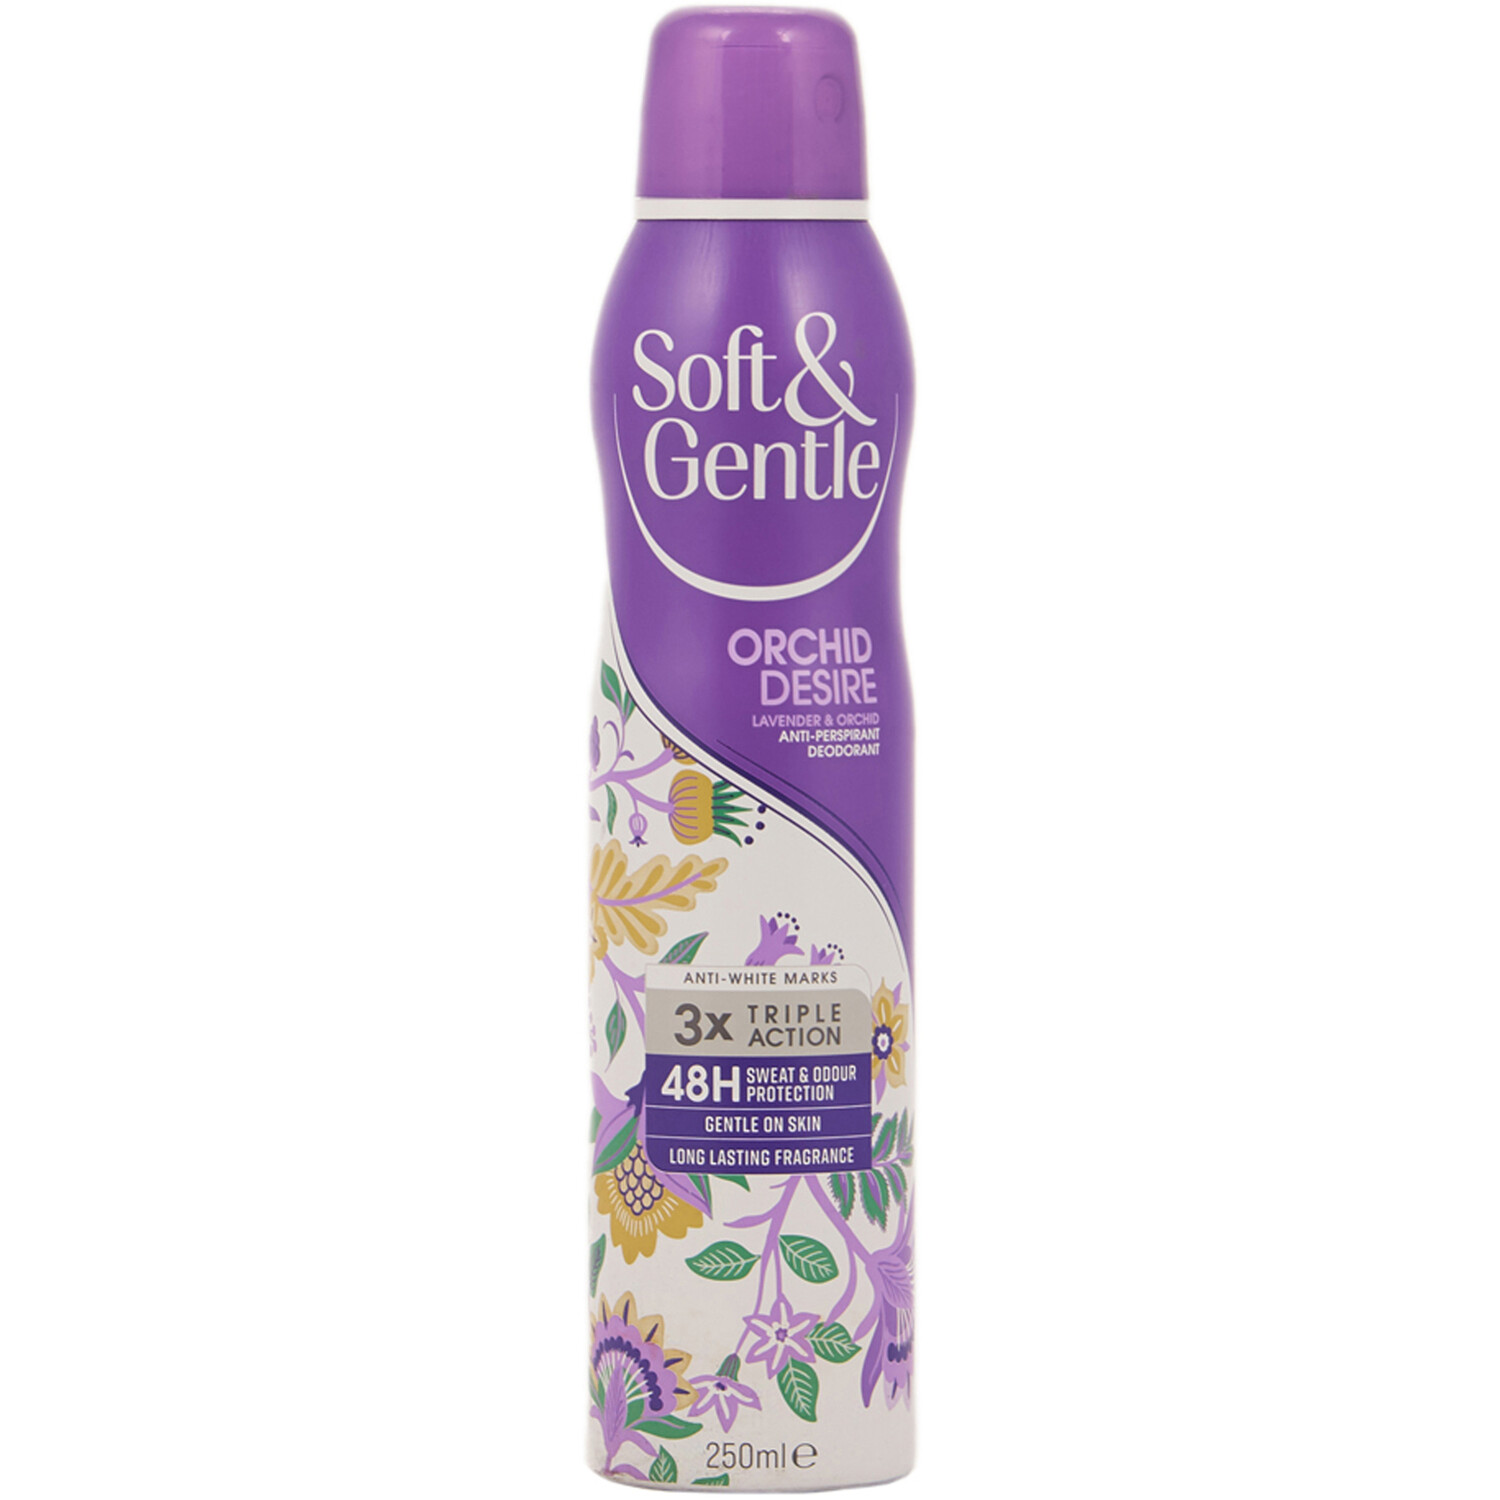 Soft & Gentle Orchid Desire Anti-Perspirant Deodorant Spray - Purple Image 1